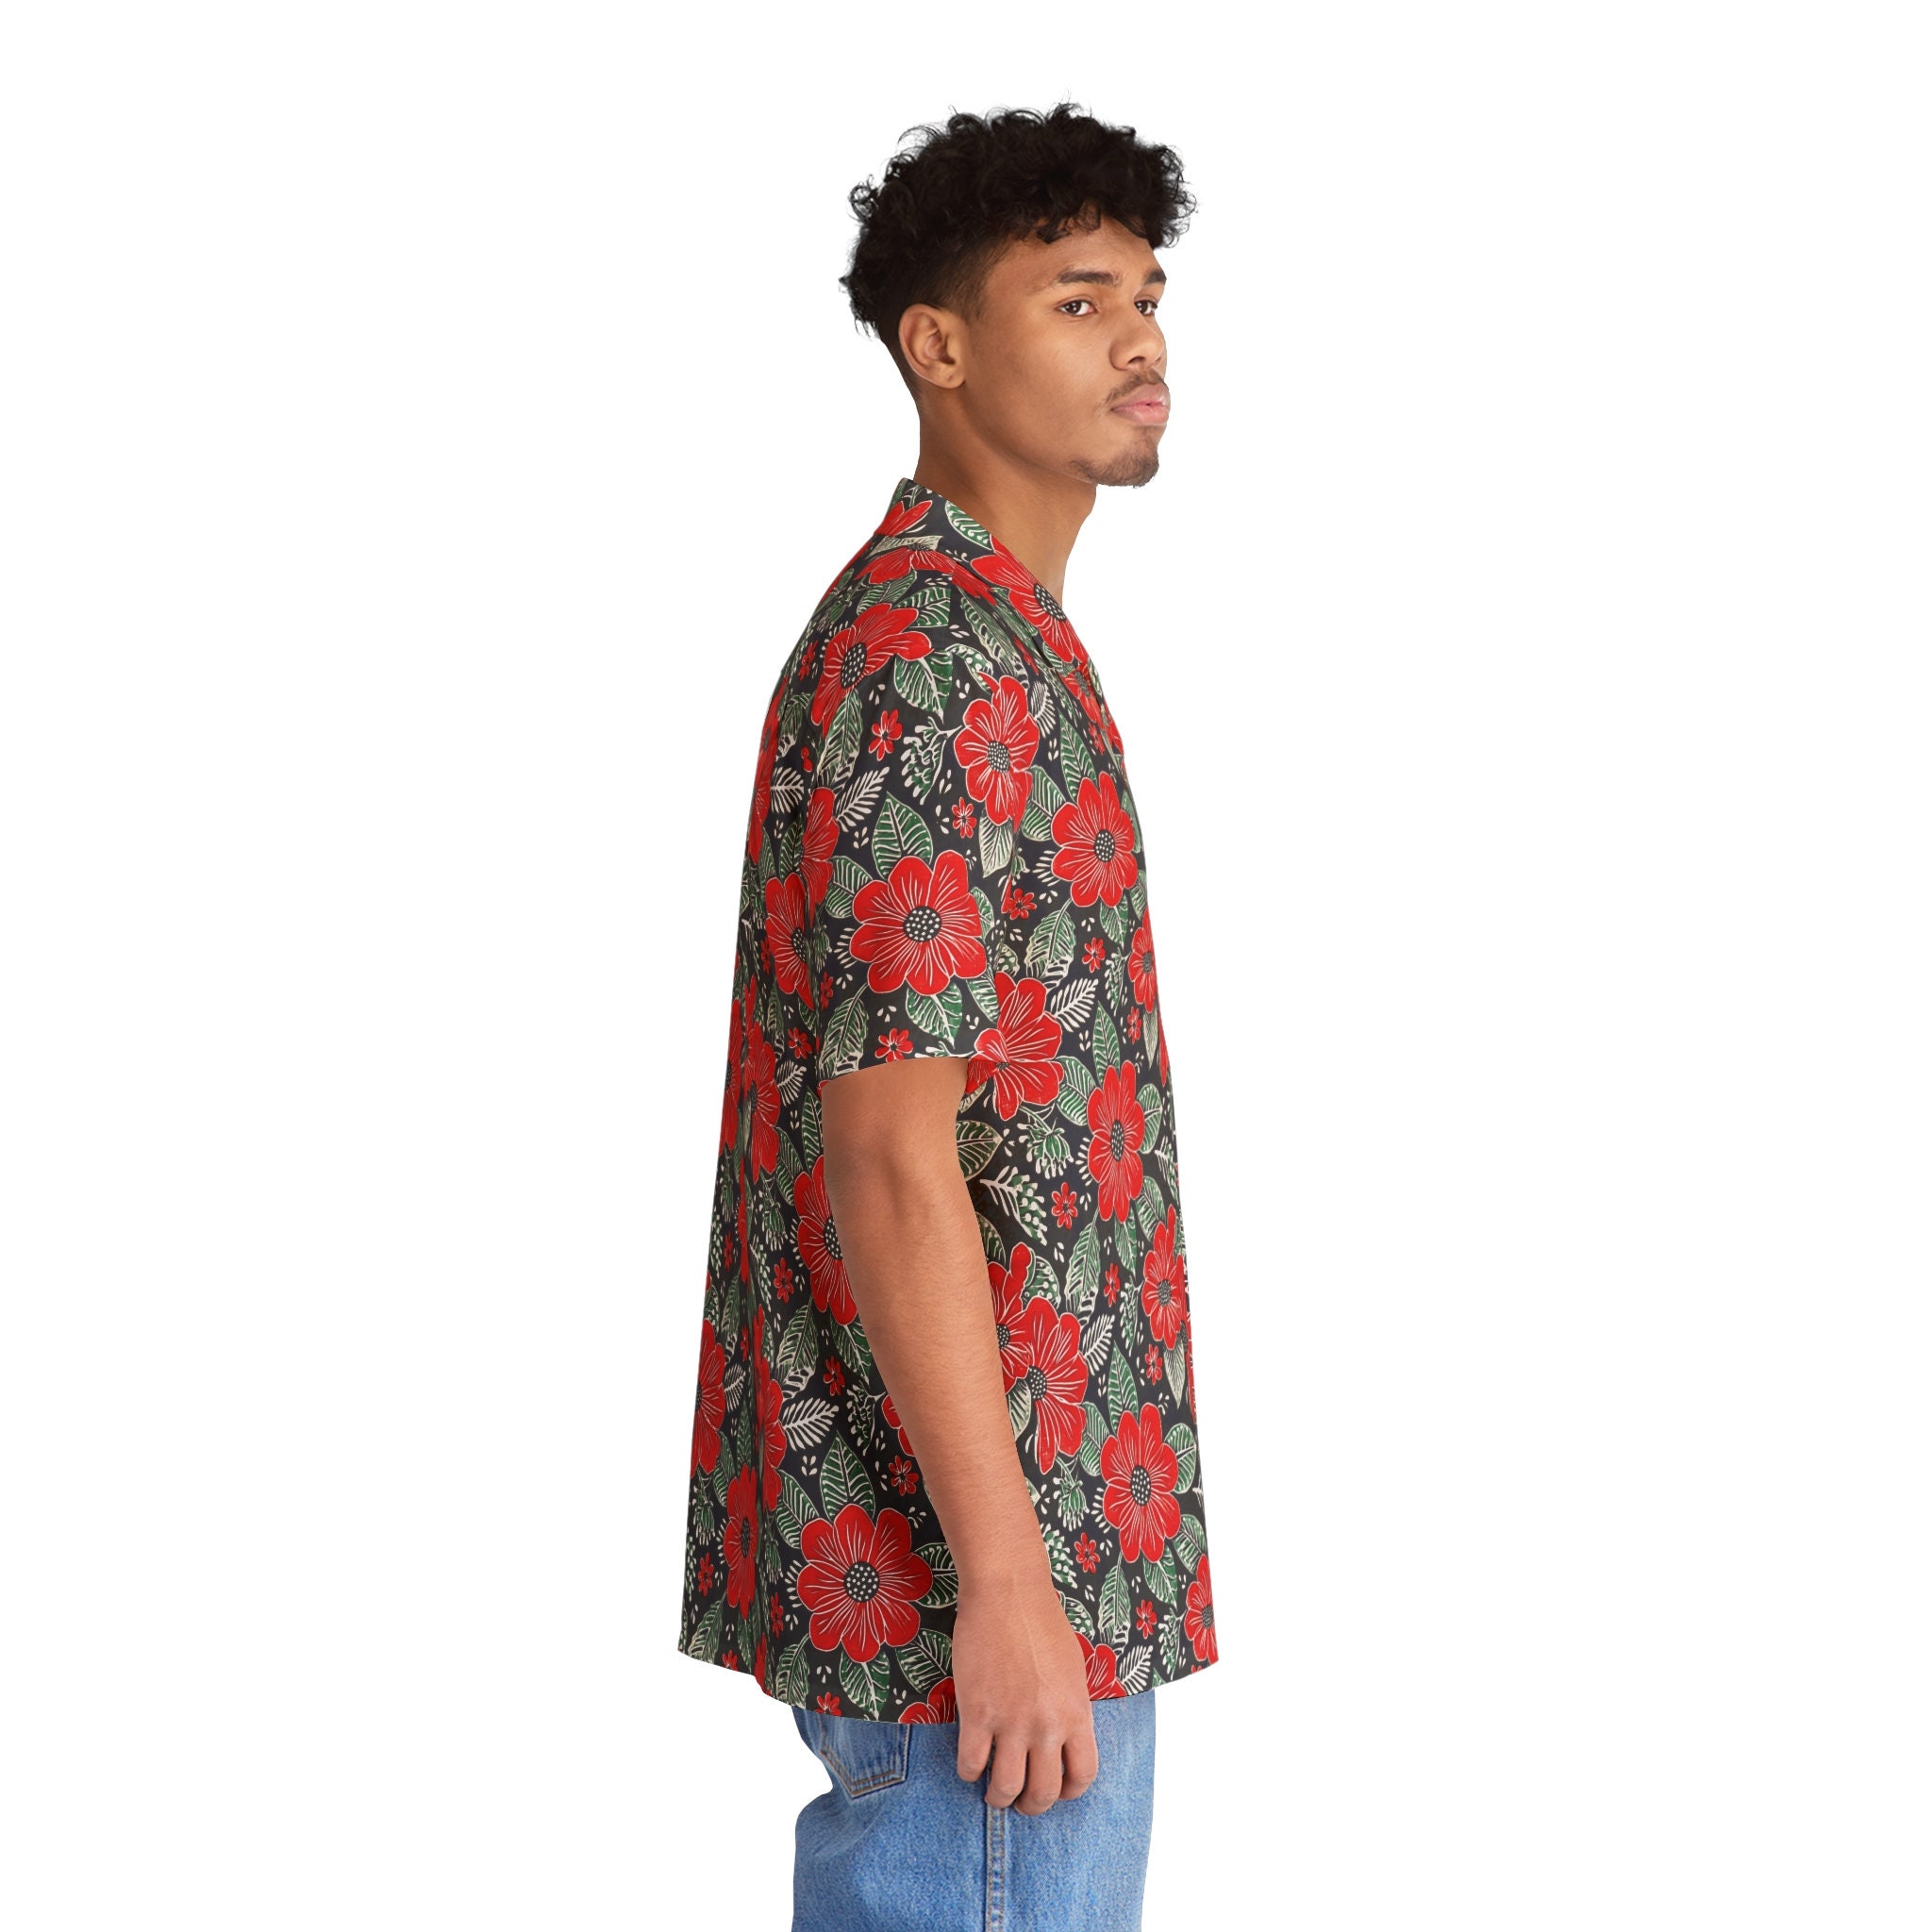 Discover Red Flowers Batik Motifs Hawaiian Shirt, All Over Print, Batik Inspired Shirt